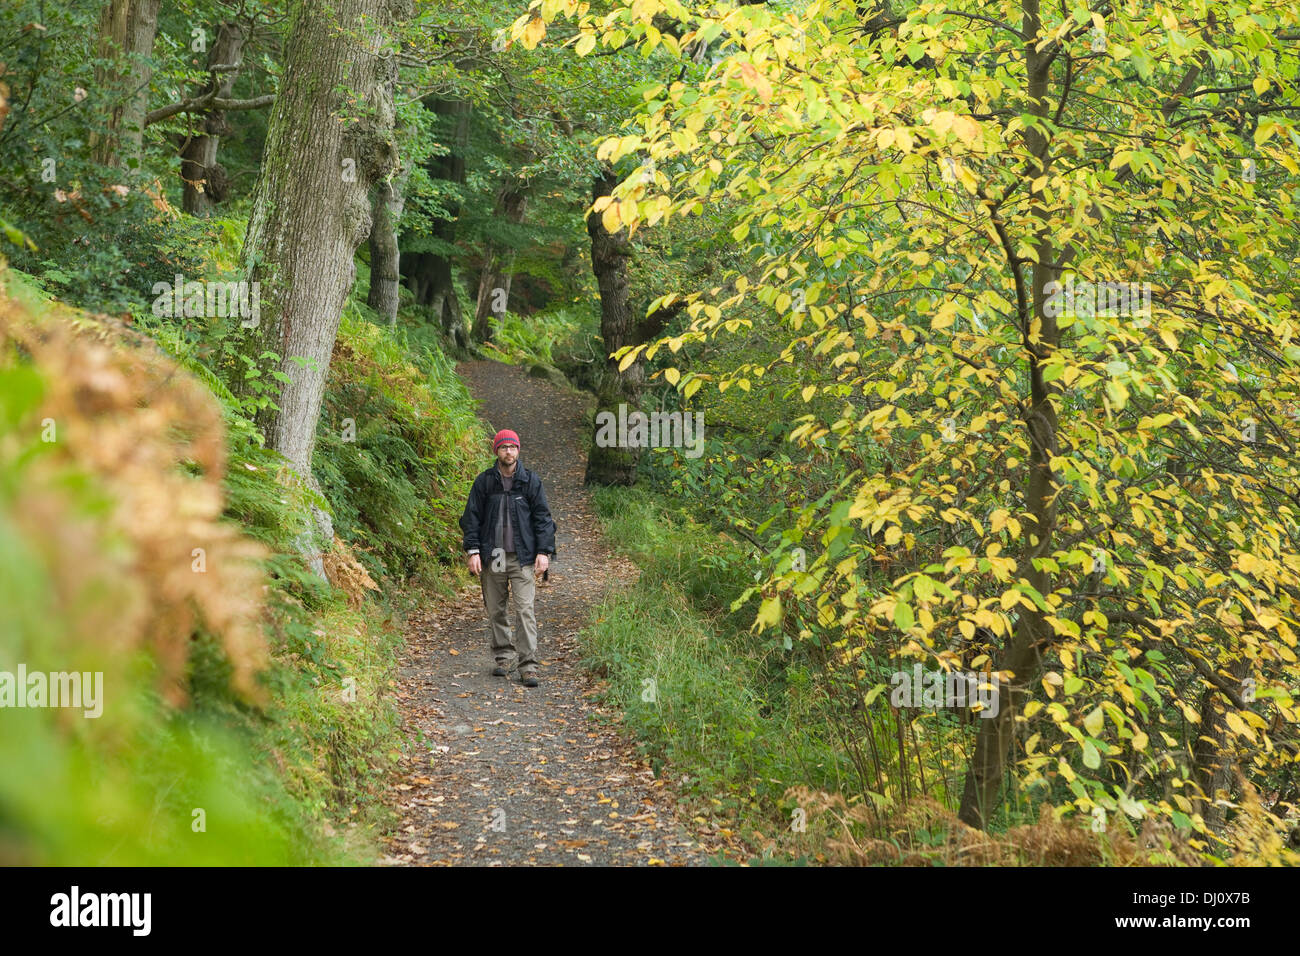 Strid Wood, Bolton Abbey, Wharfedale, Yorkshire Dales National Park, England, UK. October 2013. Stock Photo